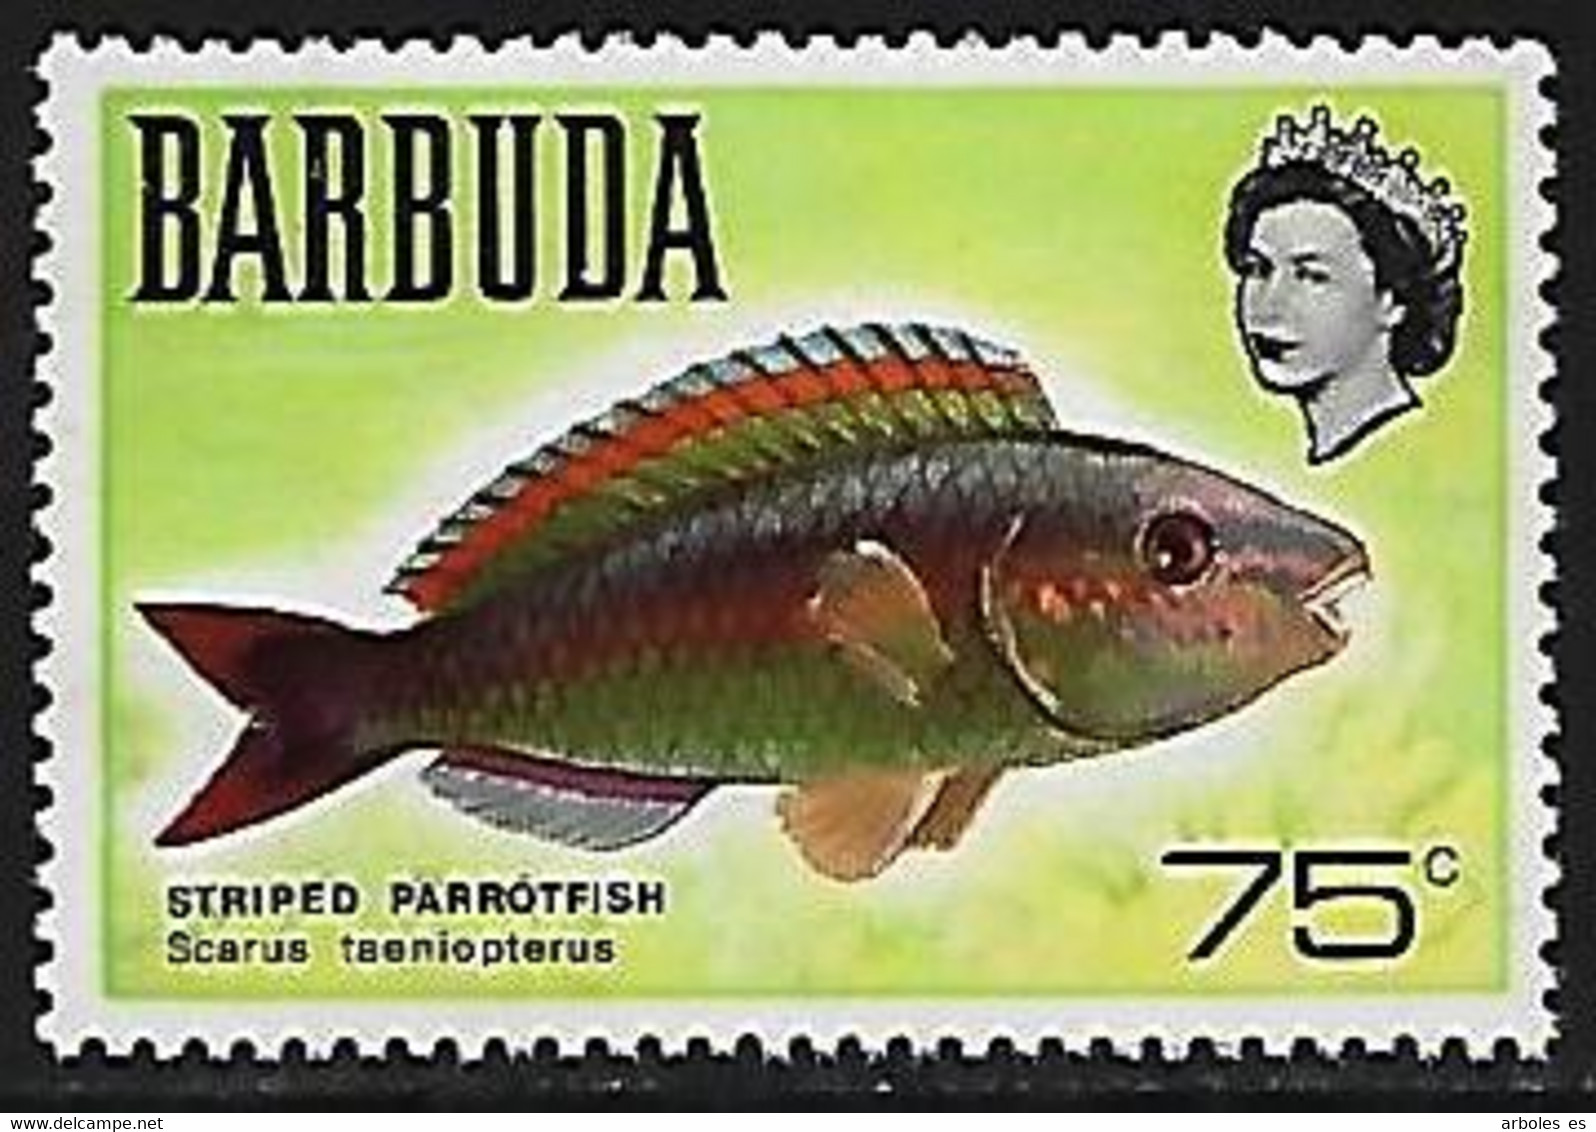 BARBUDA - SERIE BASICA - AÑO 1968 - Nº CATALOGO YVERT 0024 - NUEVOS - Barbuda (...-1981)